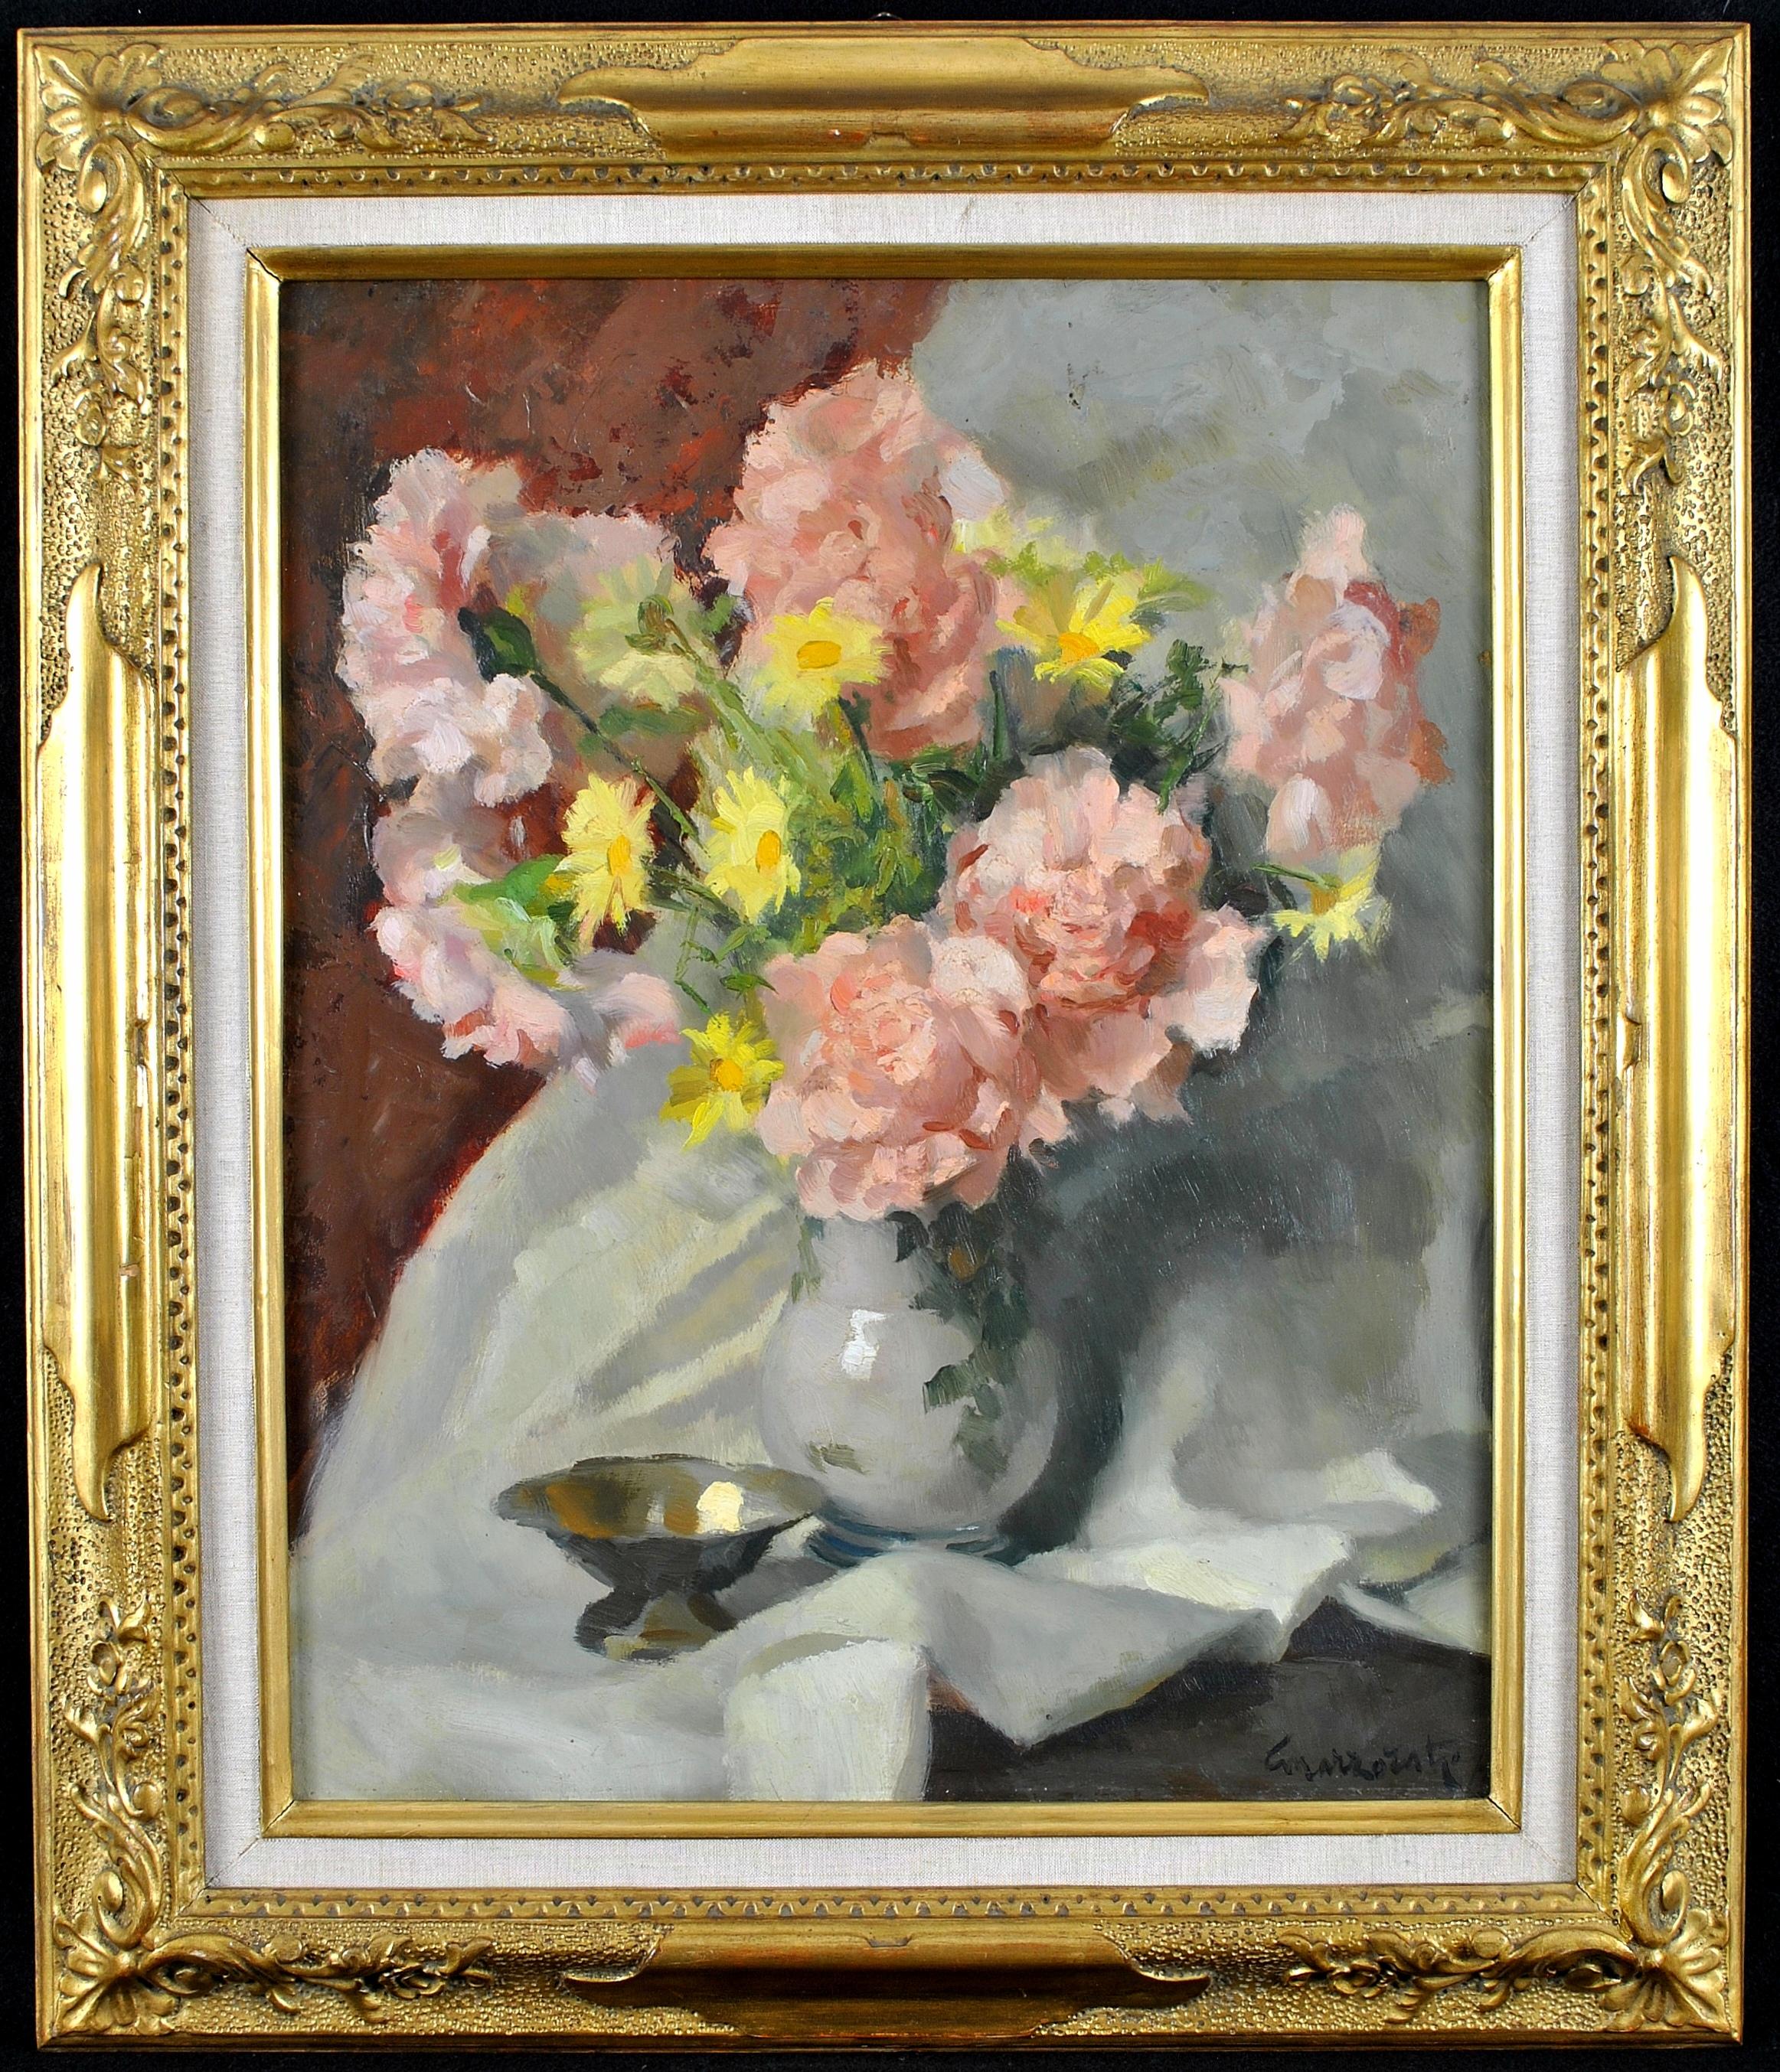 Roses & Wildflowers - 20th Century Italian Impressionist Still Life Oil Painting